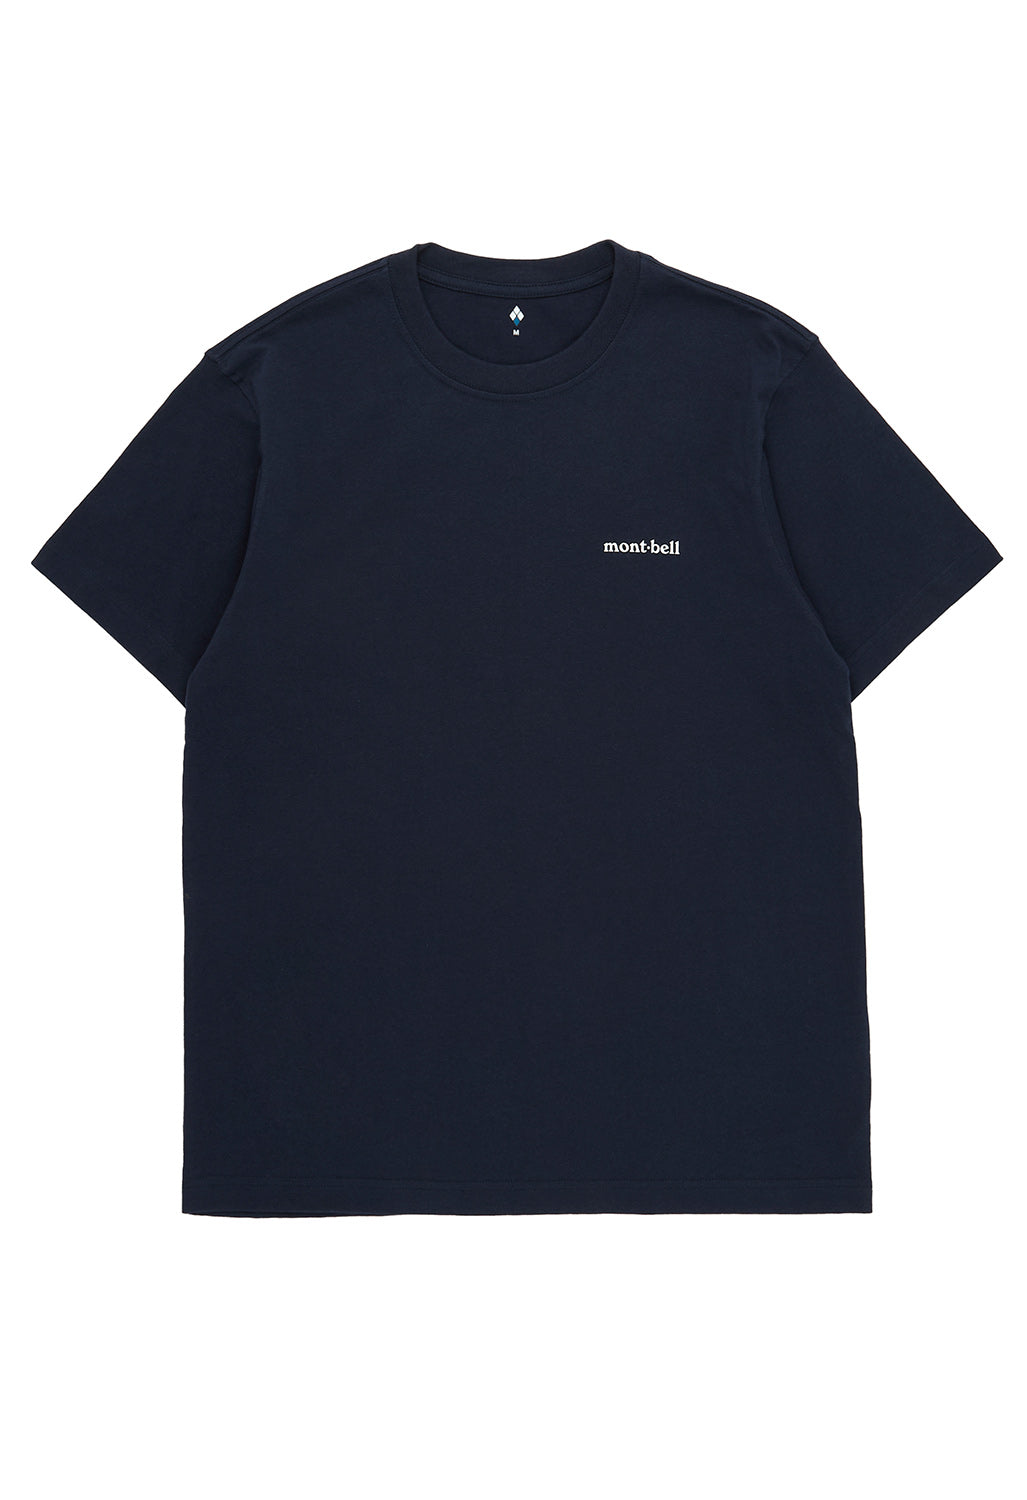 Montbell Pear Skin Cotton Shimayama T-Shirt - Navy